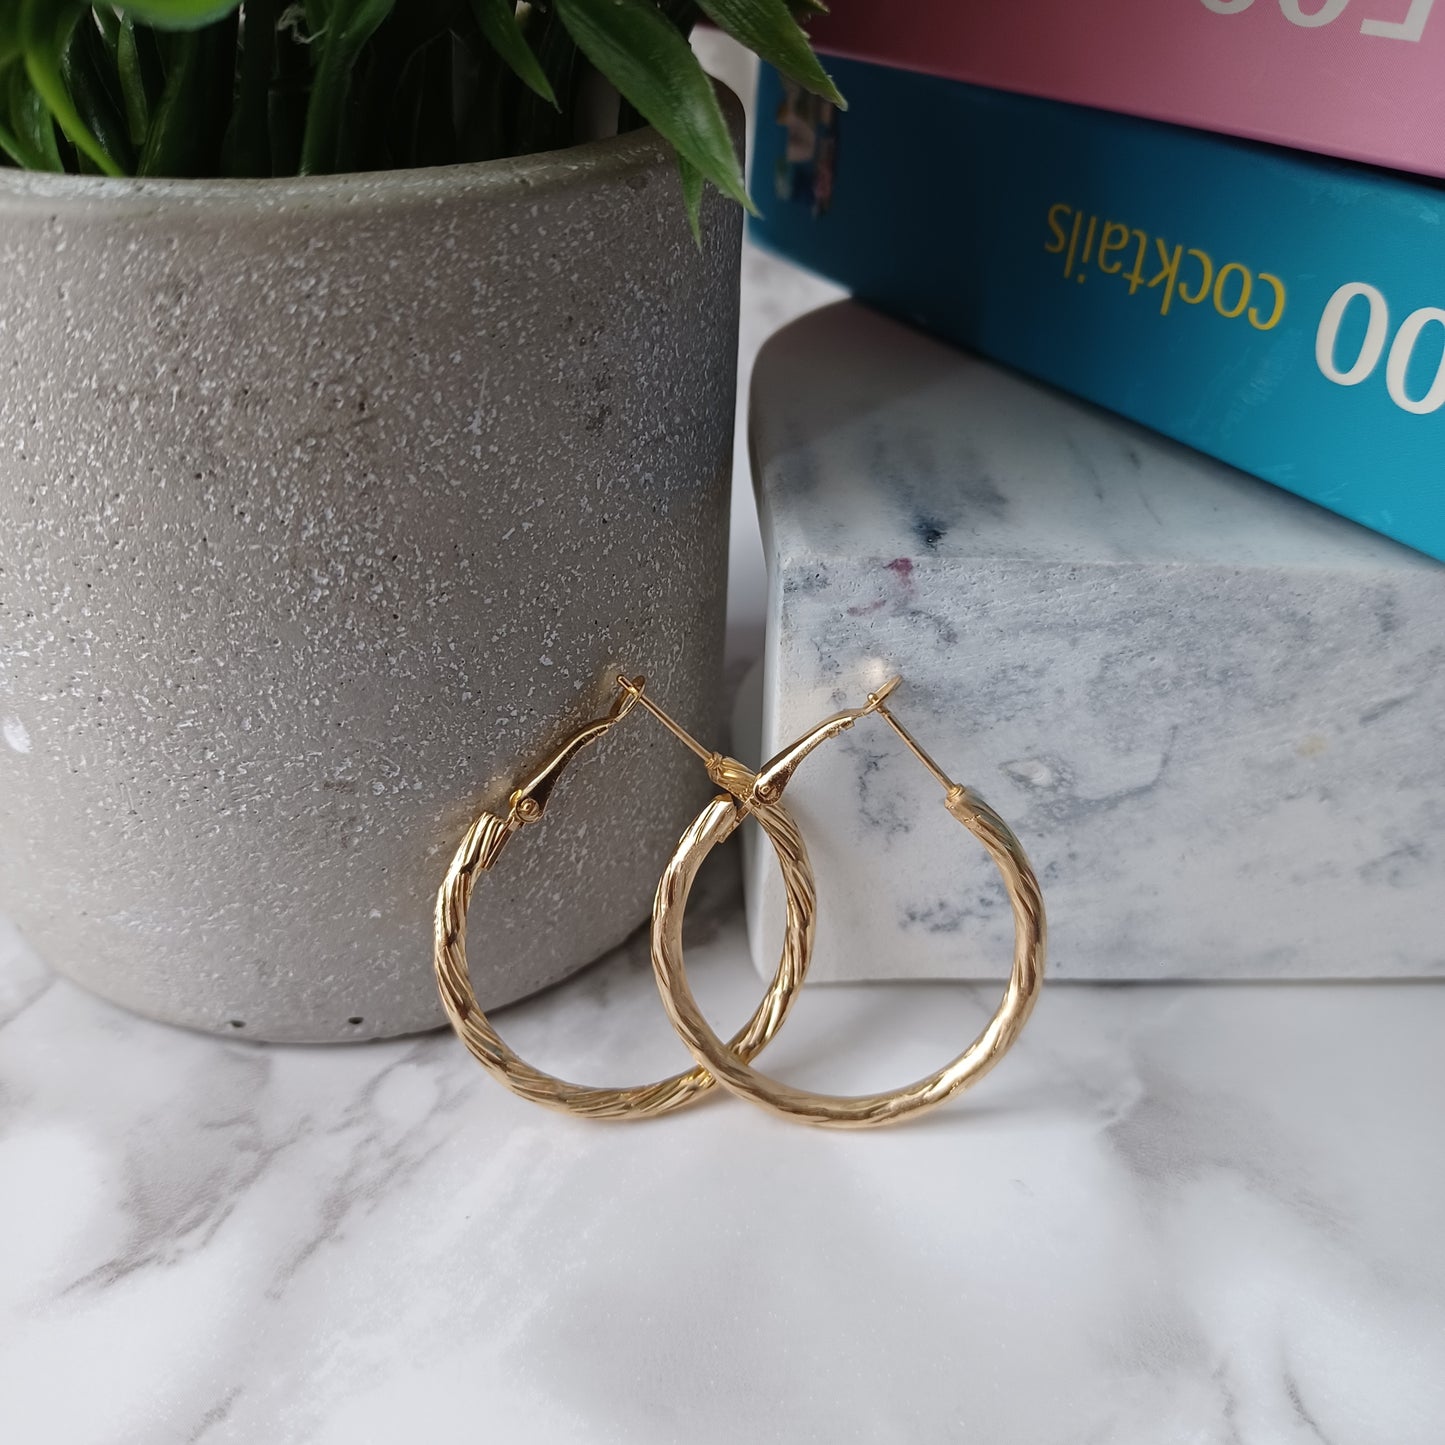 Boucles d'oreilles anneaux or ronds texturés/ Textured round gold hoop earrings